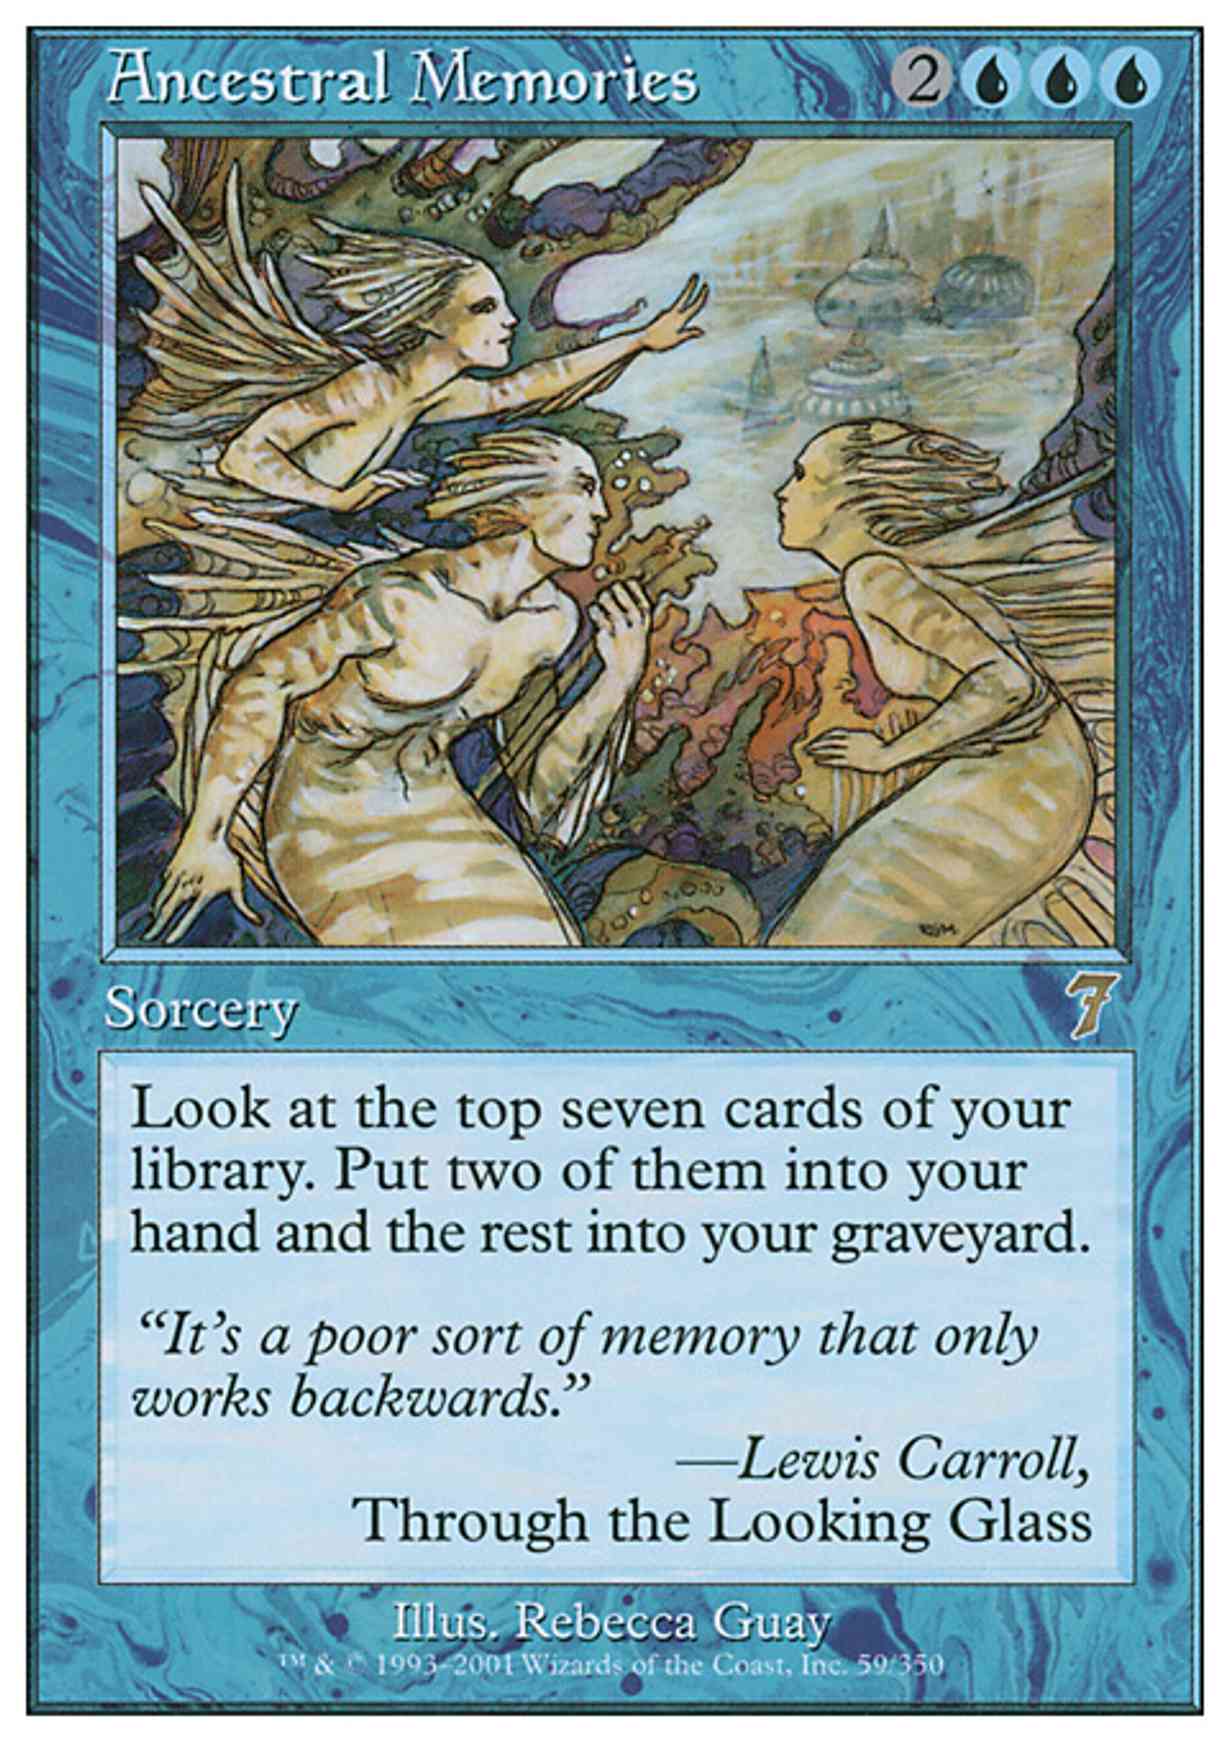 Ancestral Memories magic card front